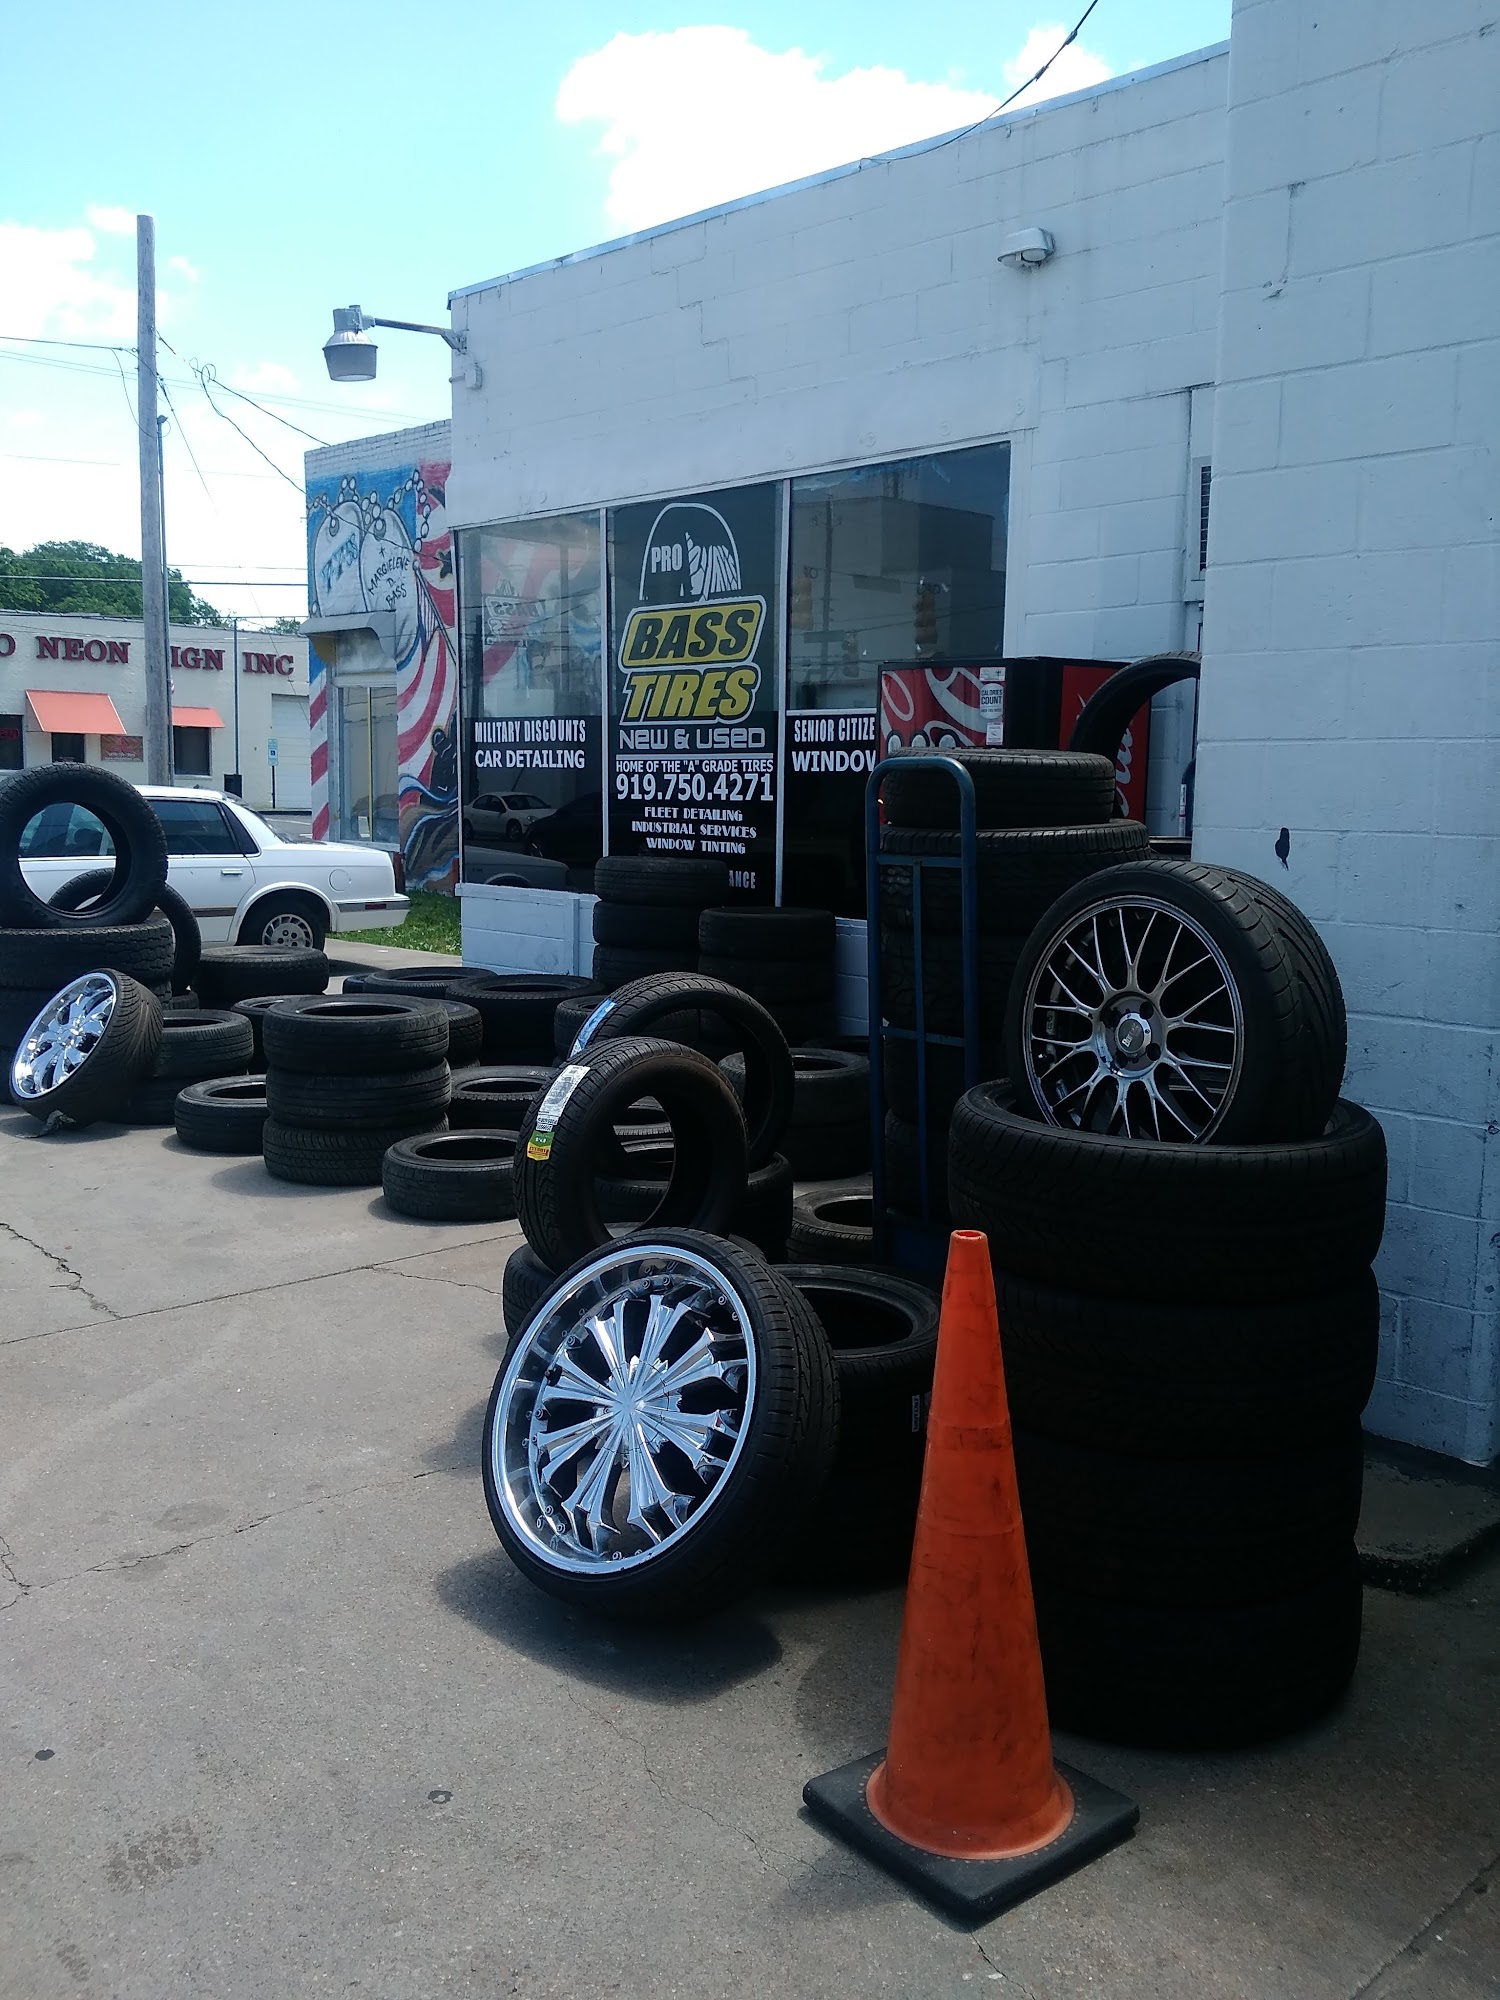 Bass Tires, Window Tint & Auto Center